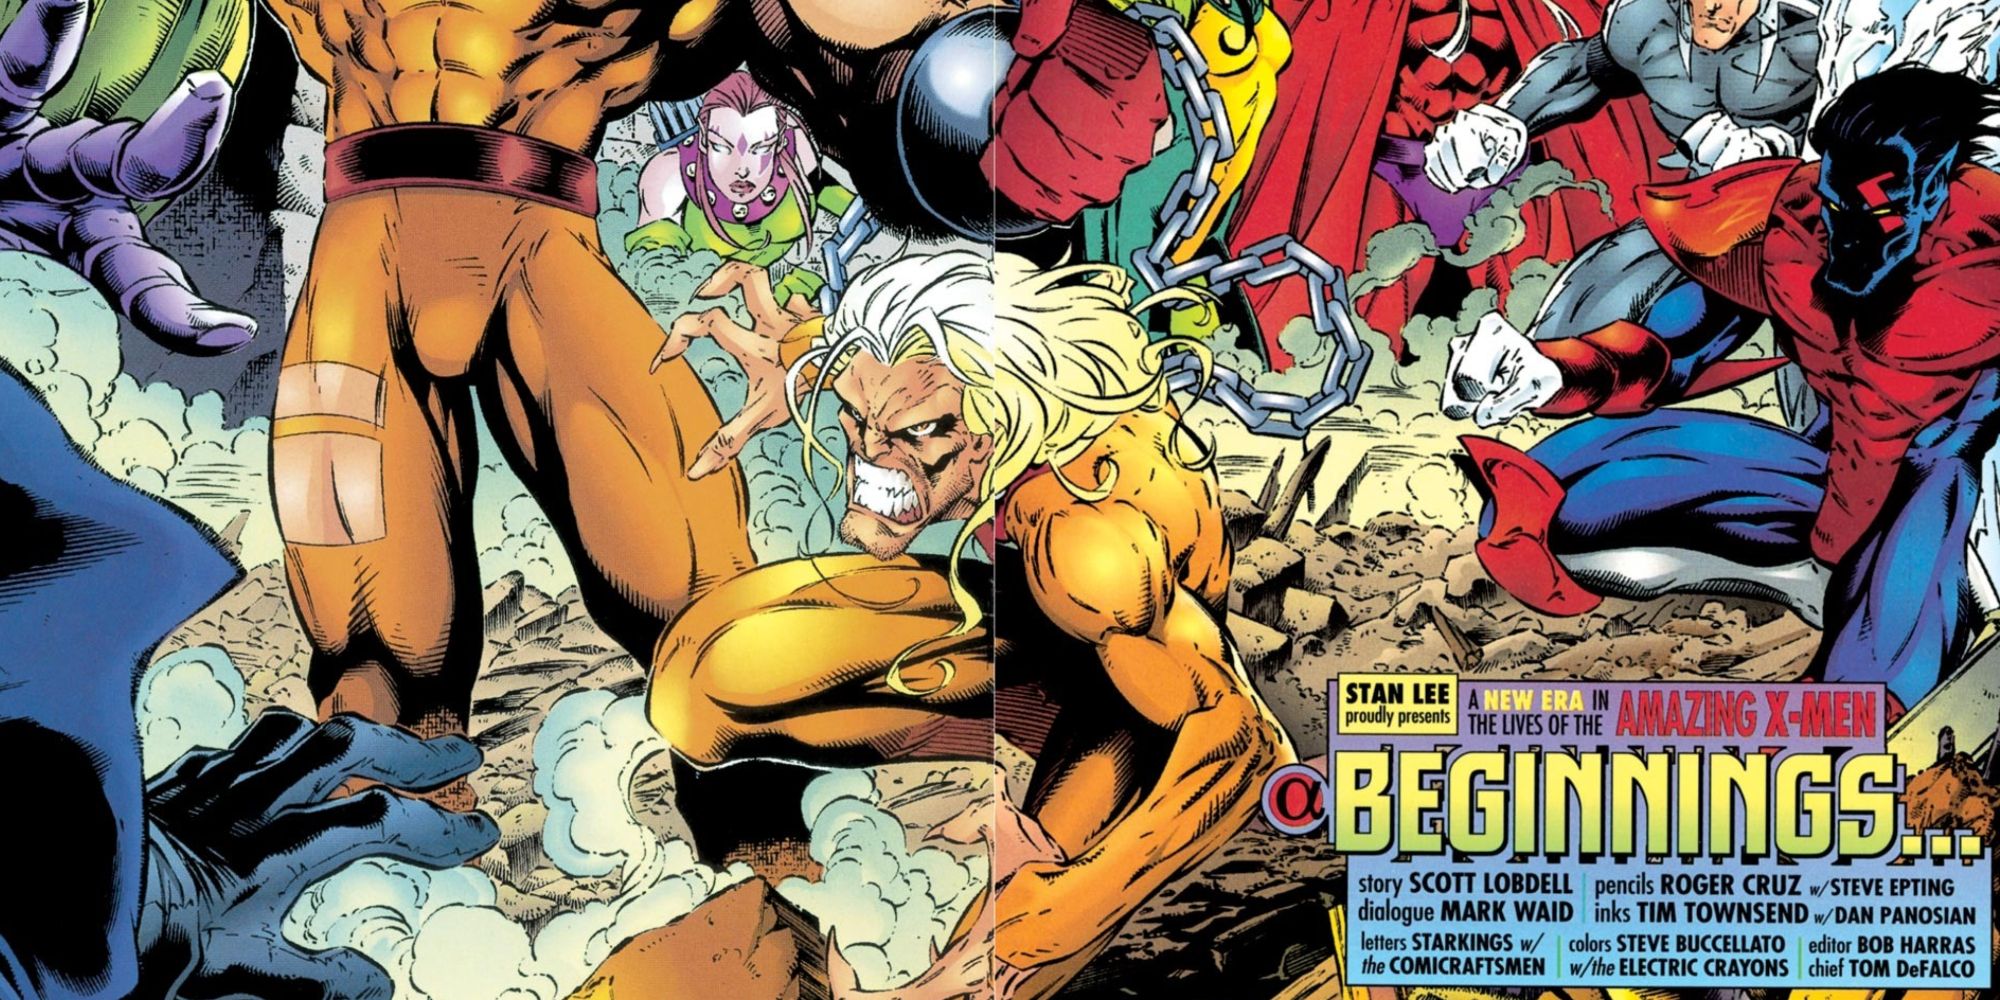 Nightcrawler appears with Wild Child in X-Men: Alpha #1 comic.